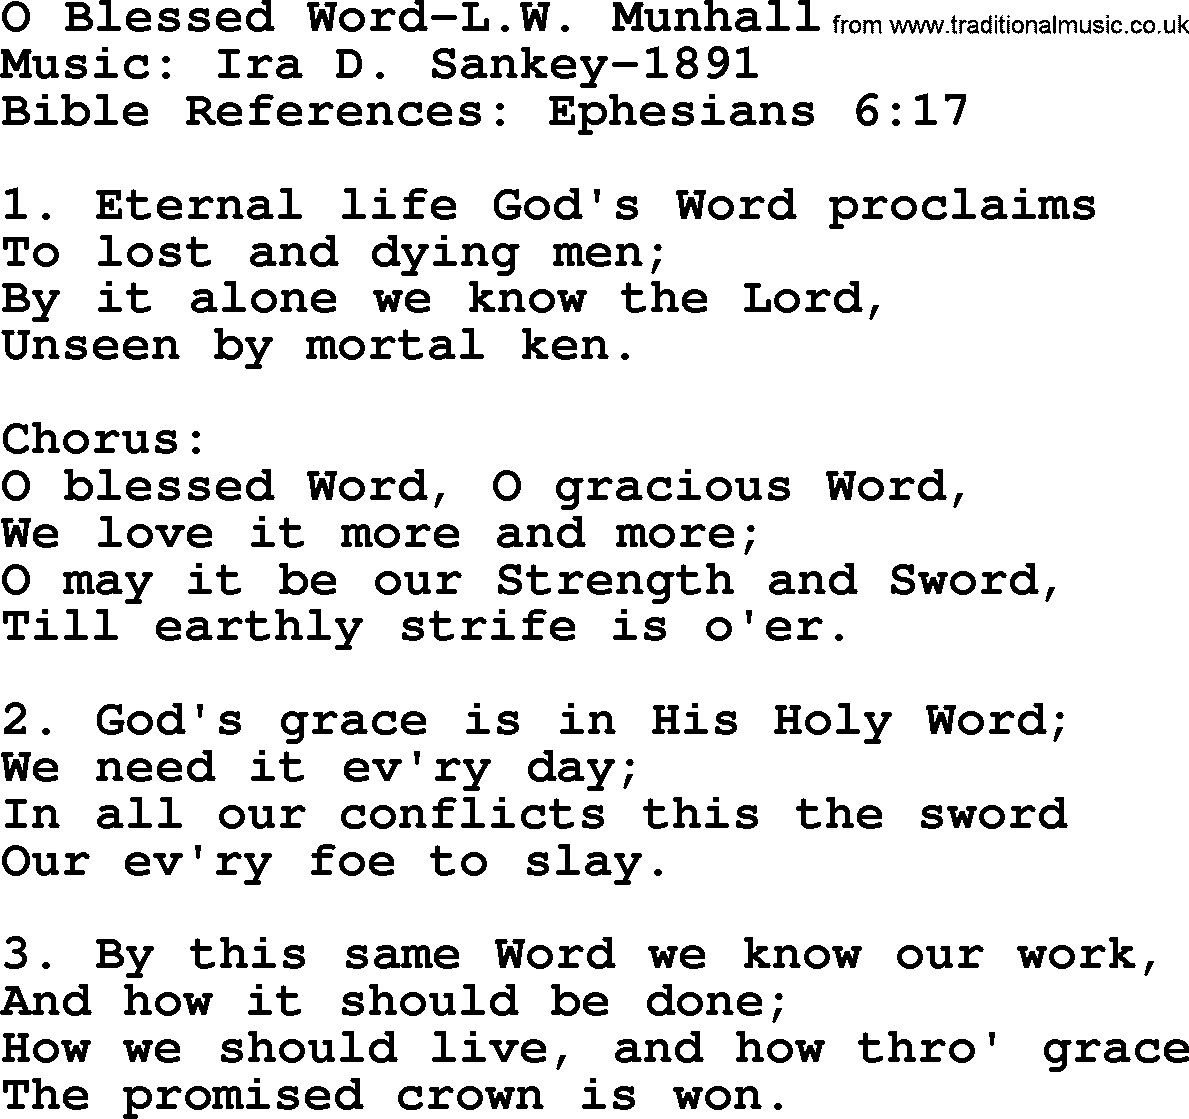 Ira Sankey hymn: O Blessed Word-Ira Sankey, lyrics